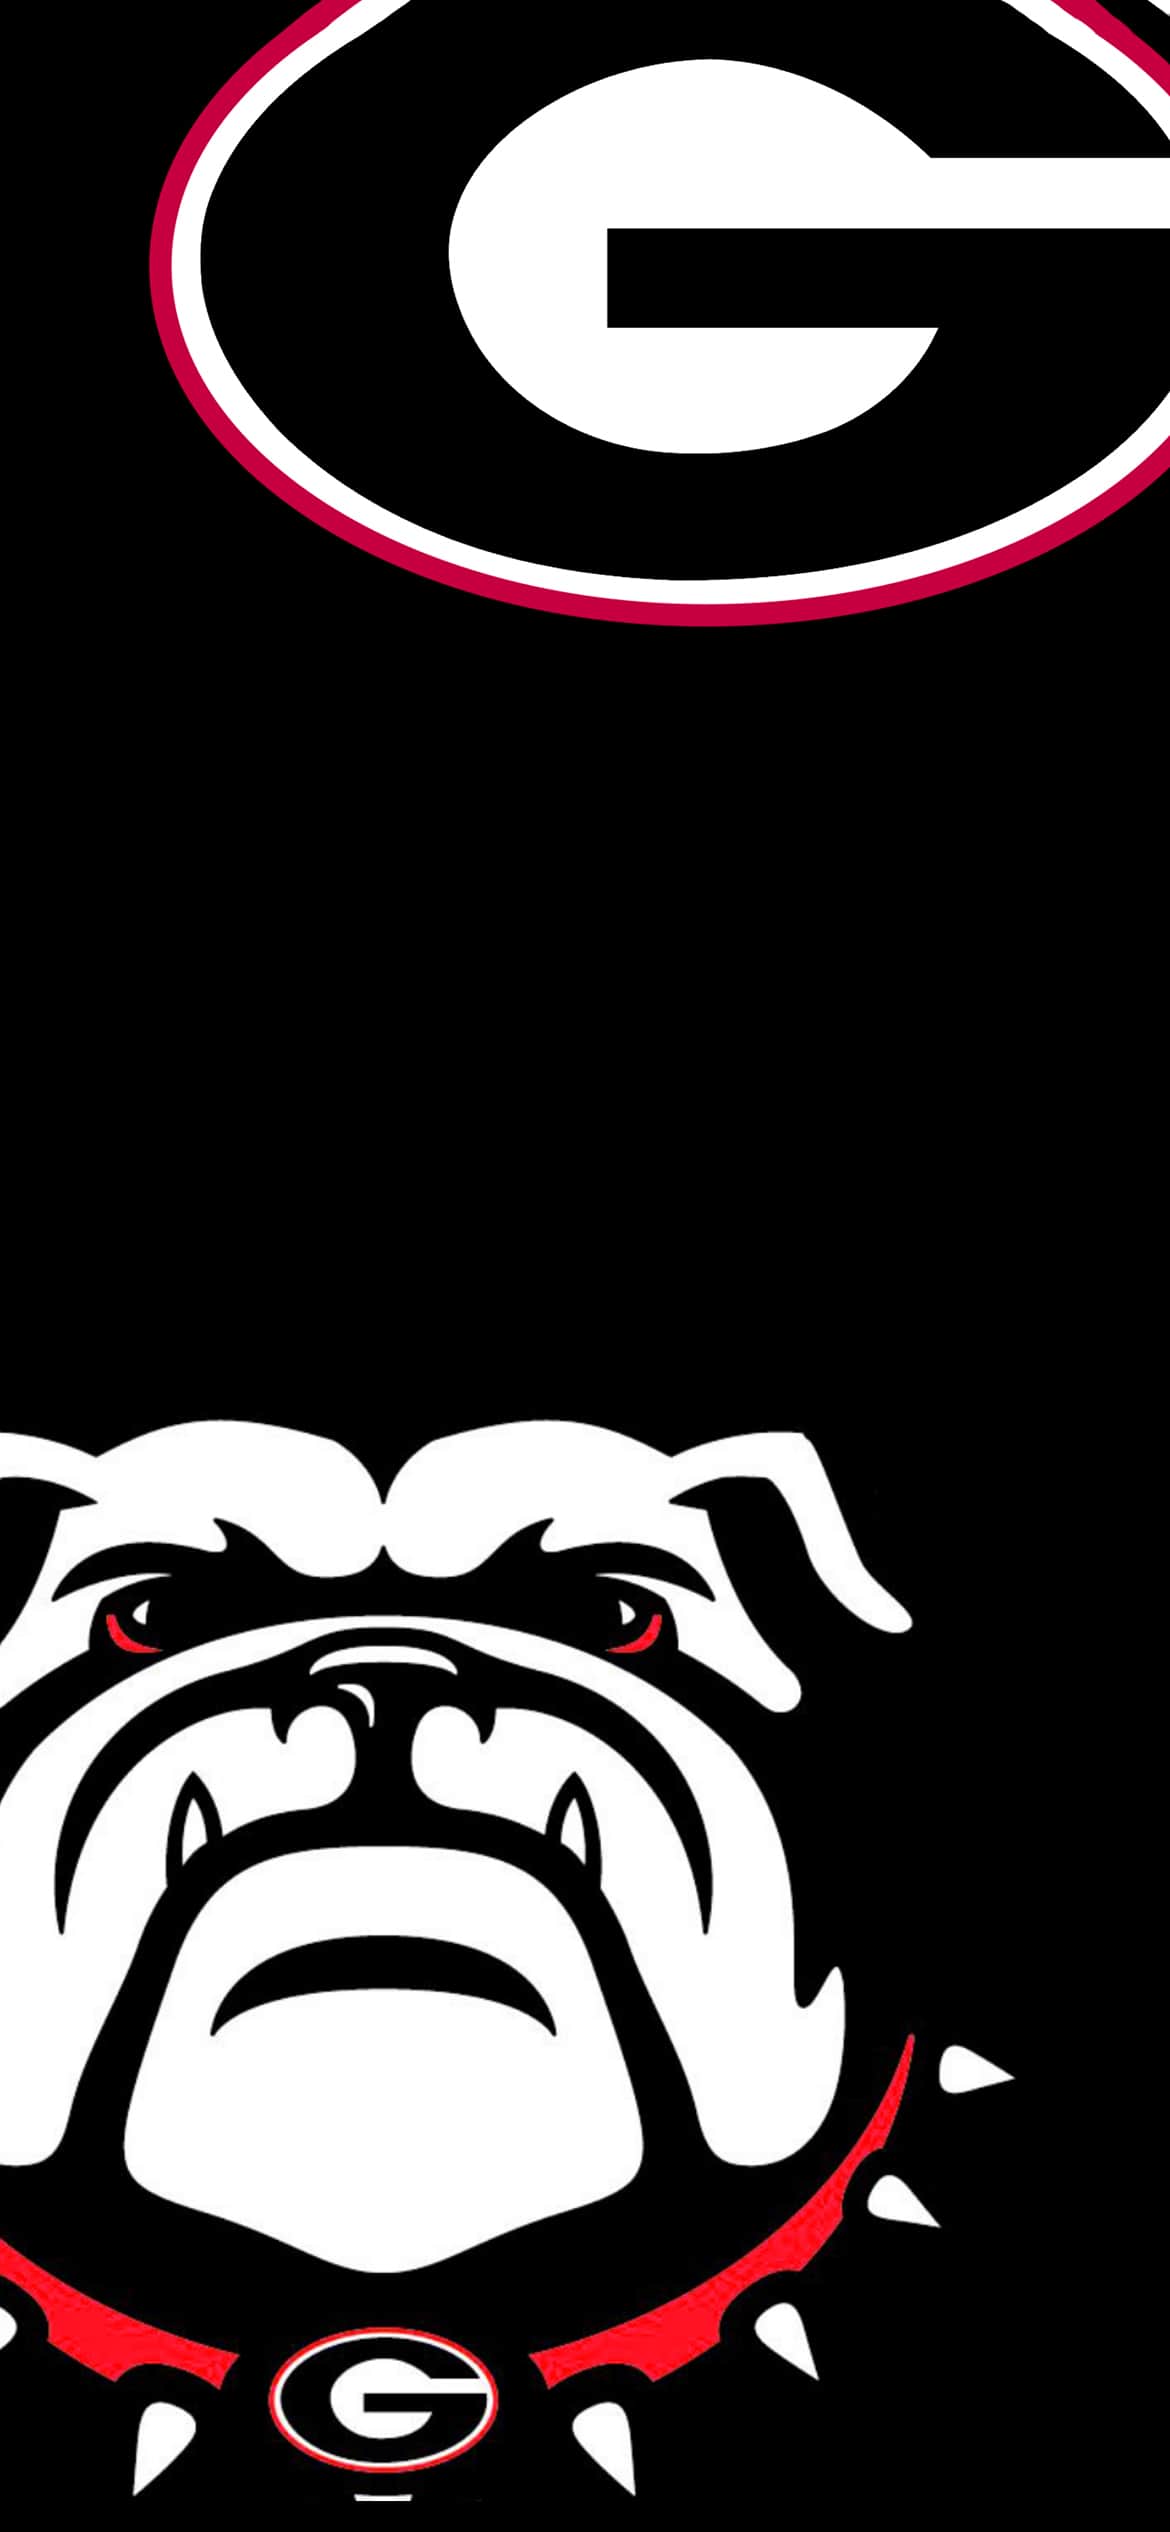 Georgia Bulldogs Wallpaper - iXpap